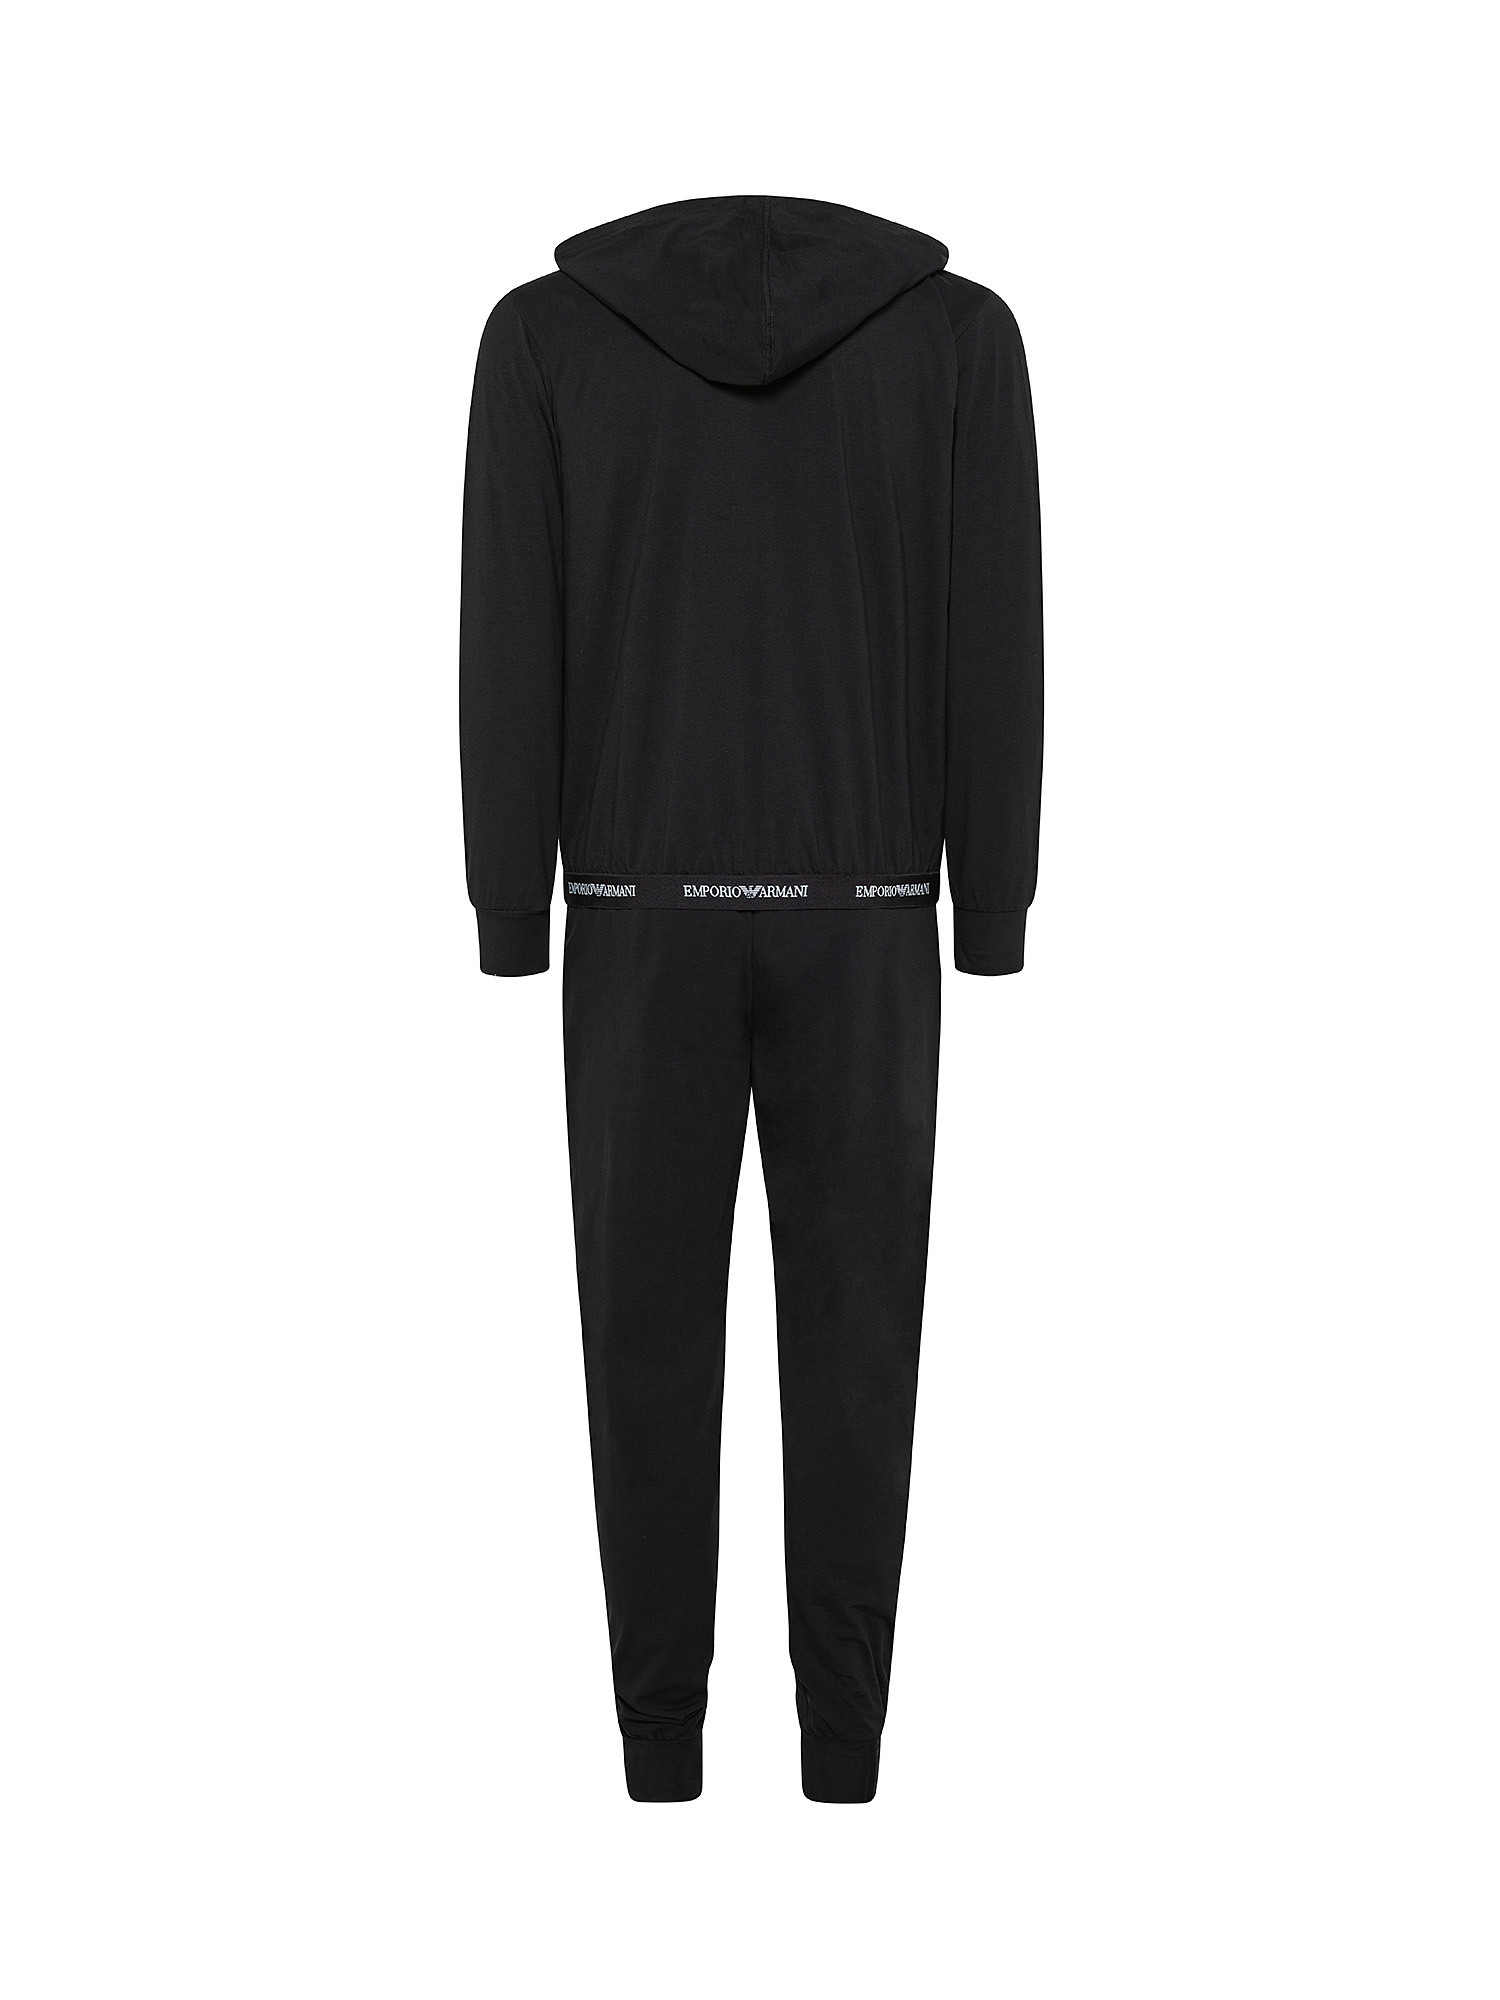 Loungewear set with hooded sweatshirt, Black, large image number 1